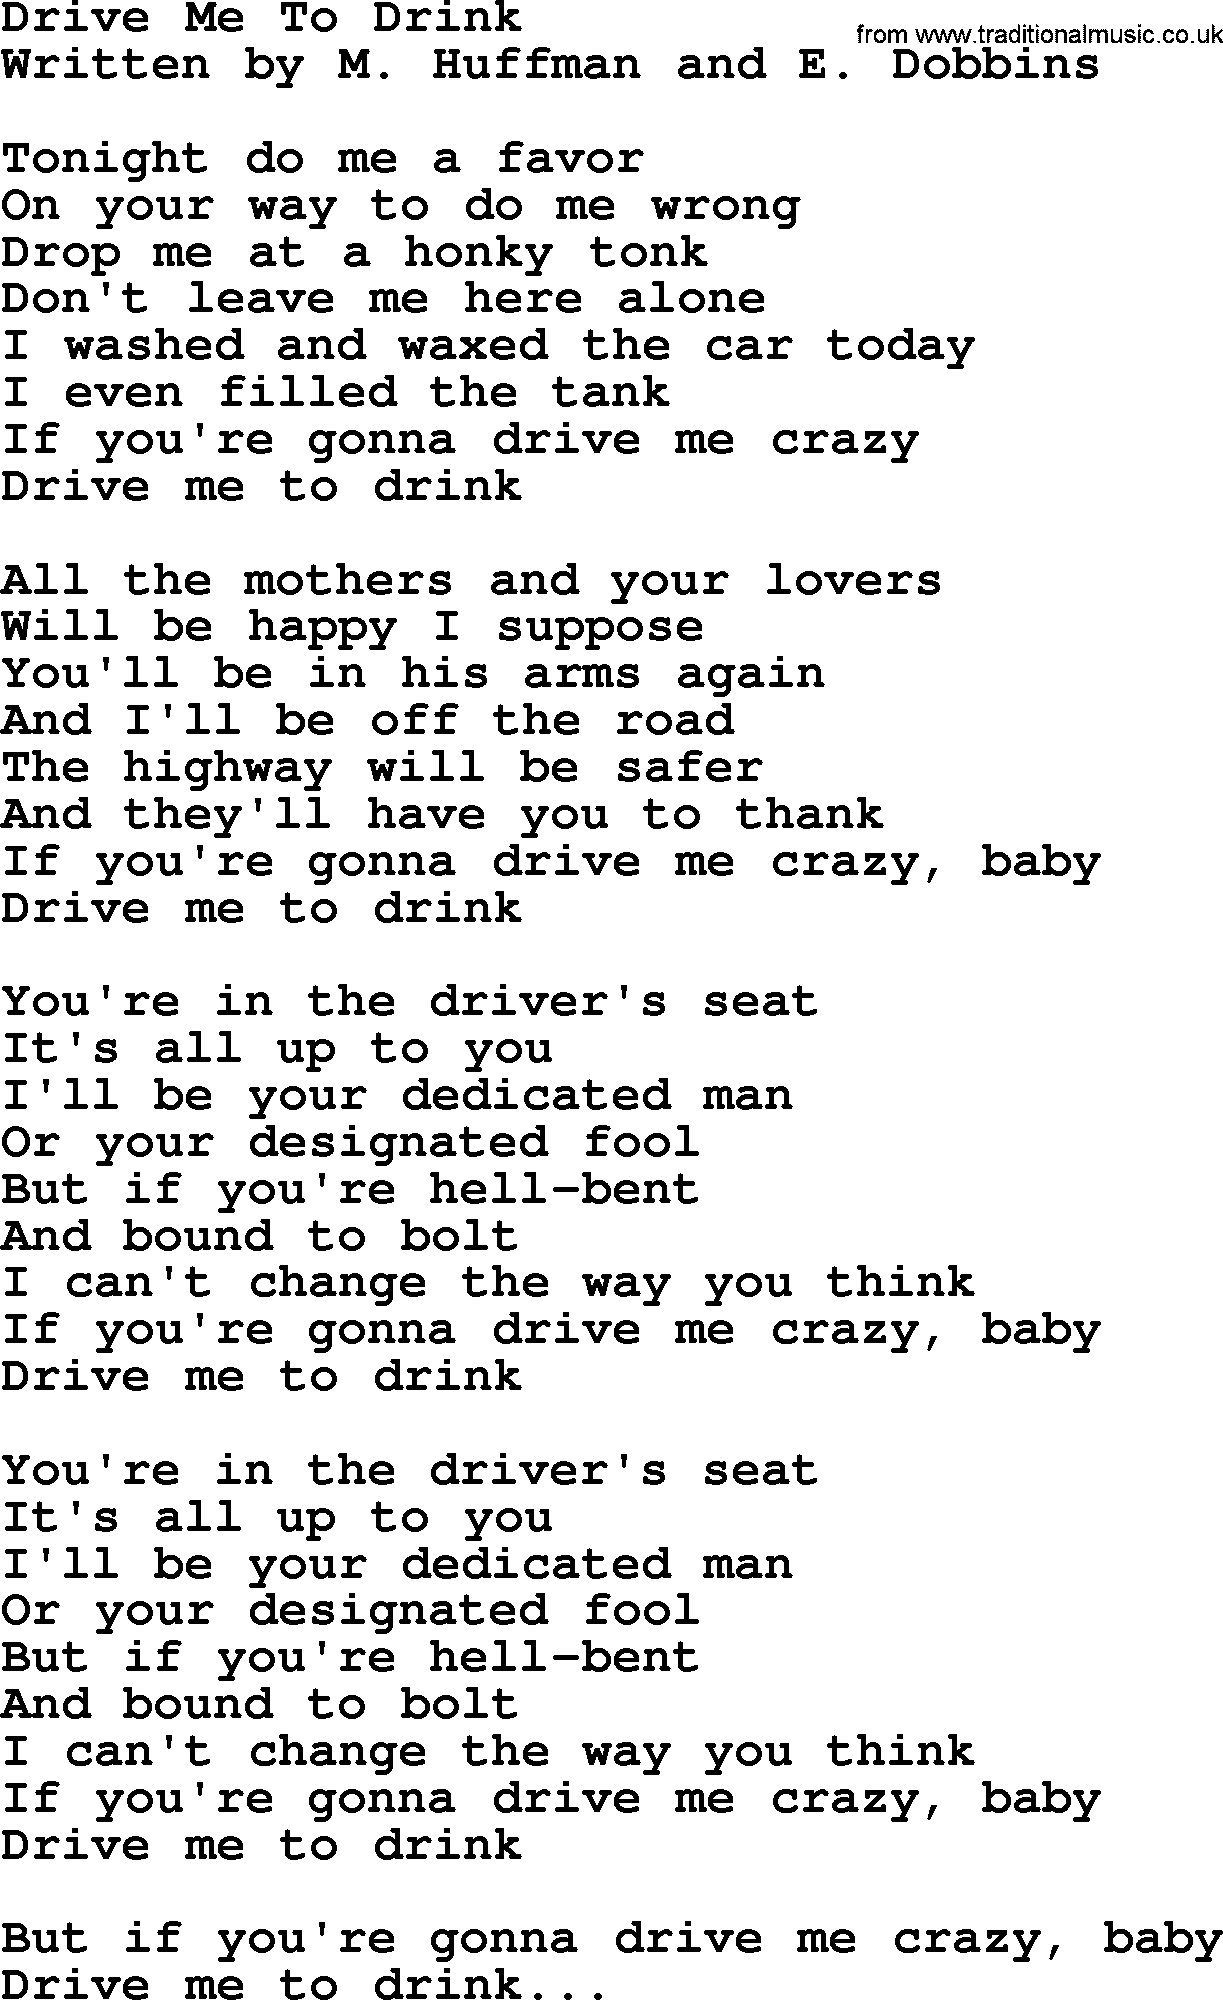 George Jones song: Drive Me To Drink, lyrics